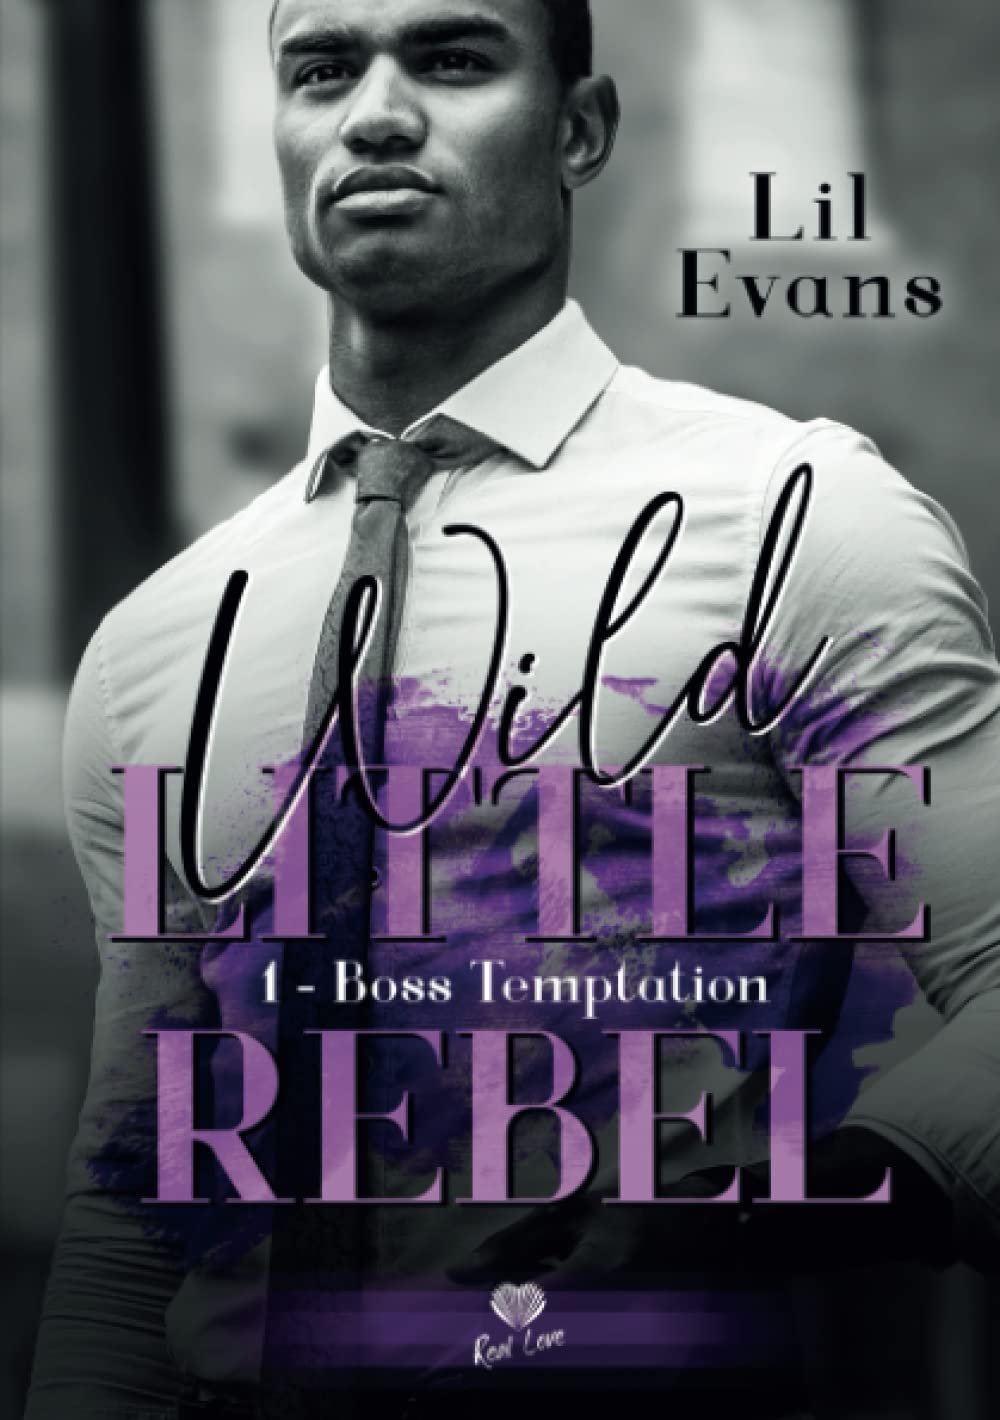 Lil Evans – Wild Little Rebel, Tome 1 : Boss Temptation